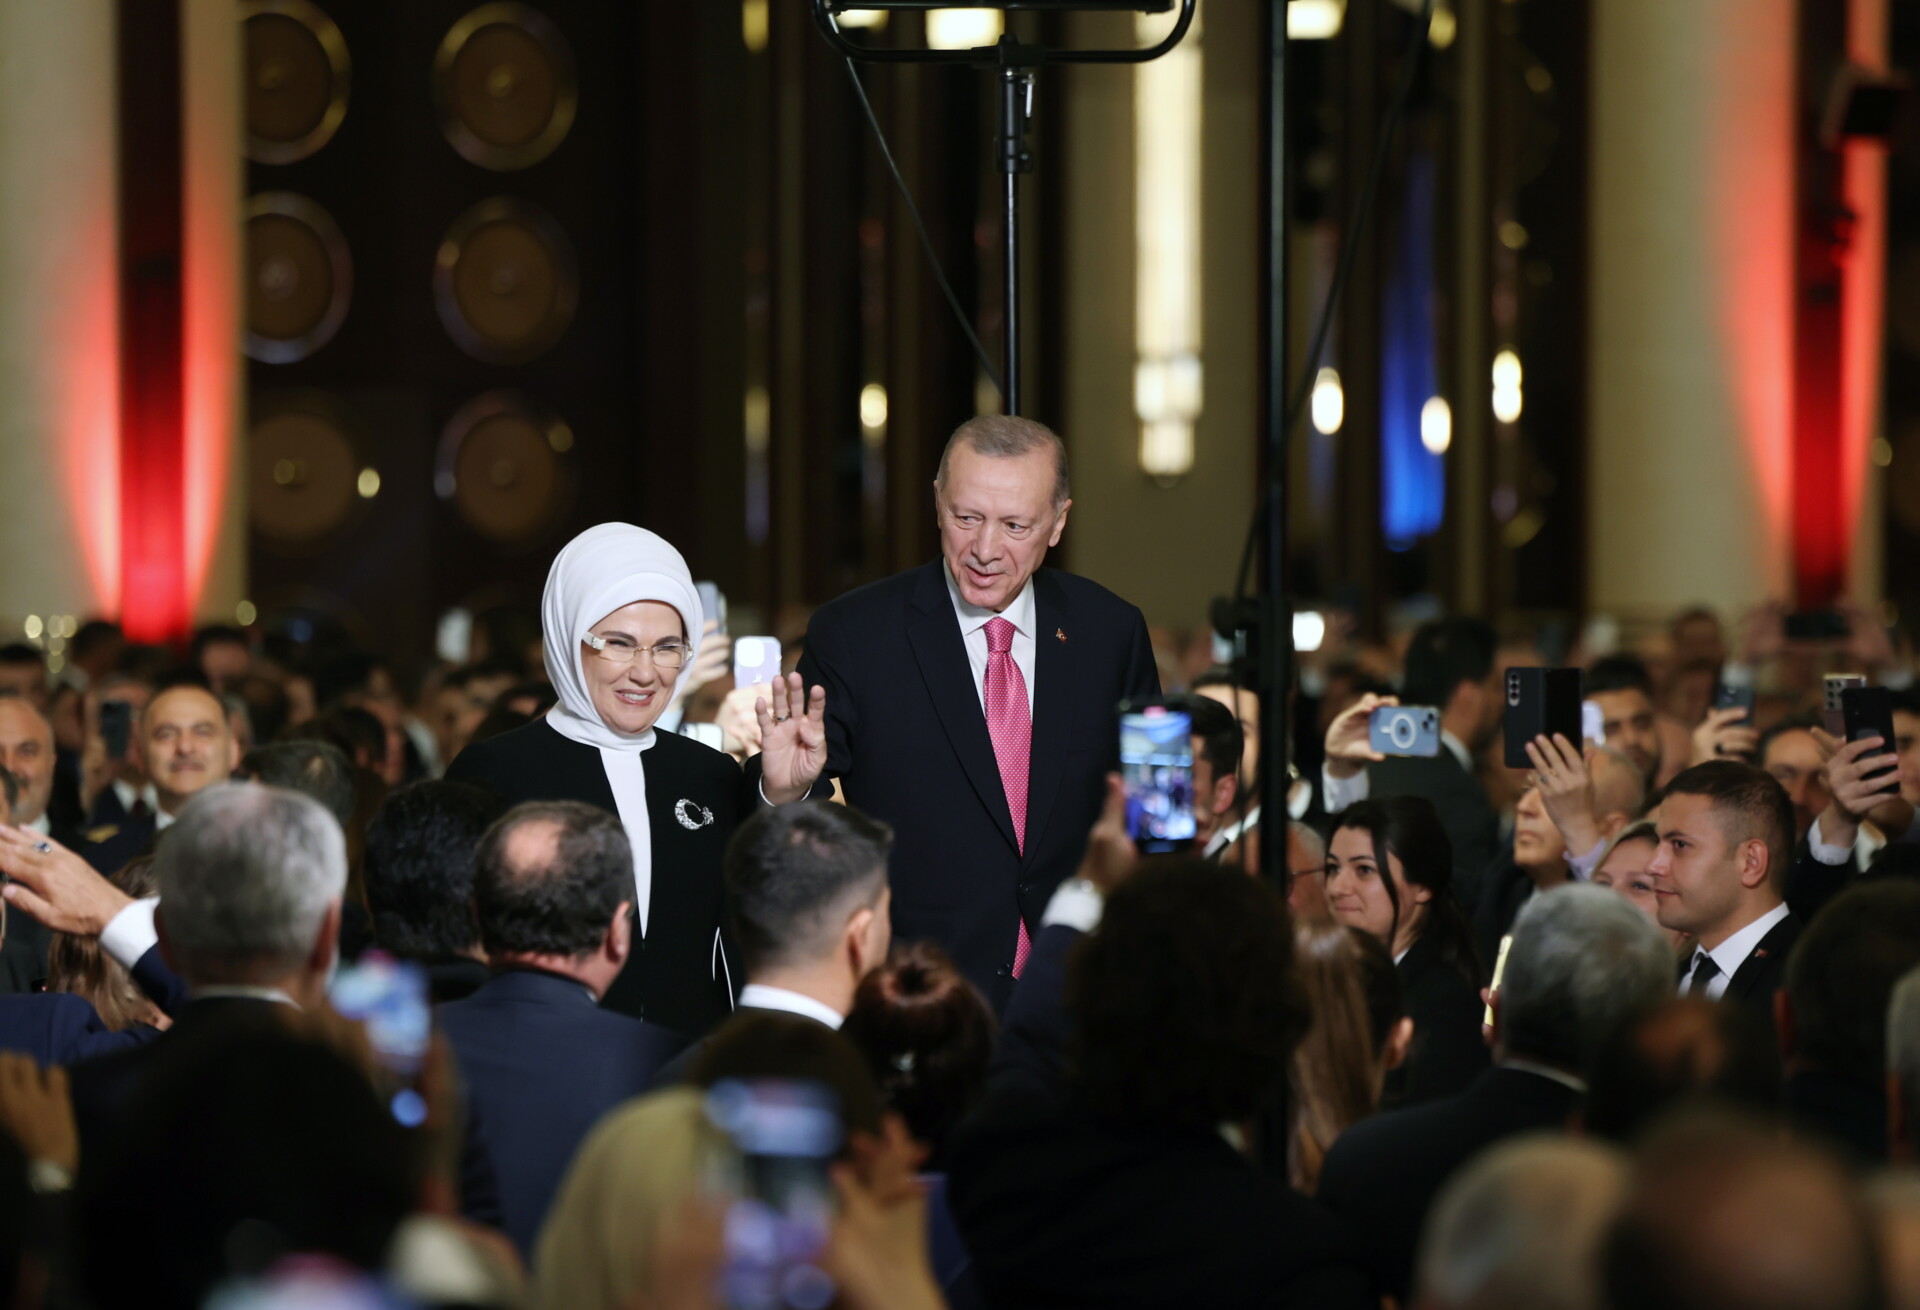 O Ρετζέπ Ταγίπ Ερντογάν και η σύζυγος του Εμινέ © EPA/TURKISH PRESIDENTIAL PRESS OFFICE / HANDOUT HANDOUT EDITORIAL USE ONLY/NO SALES